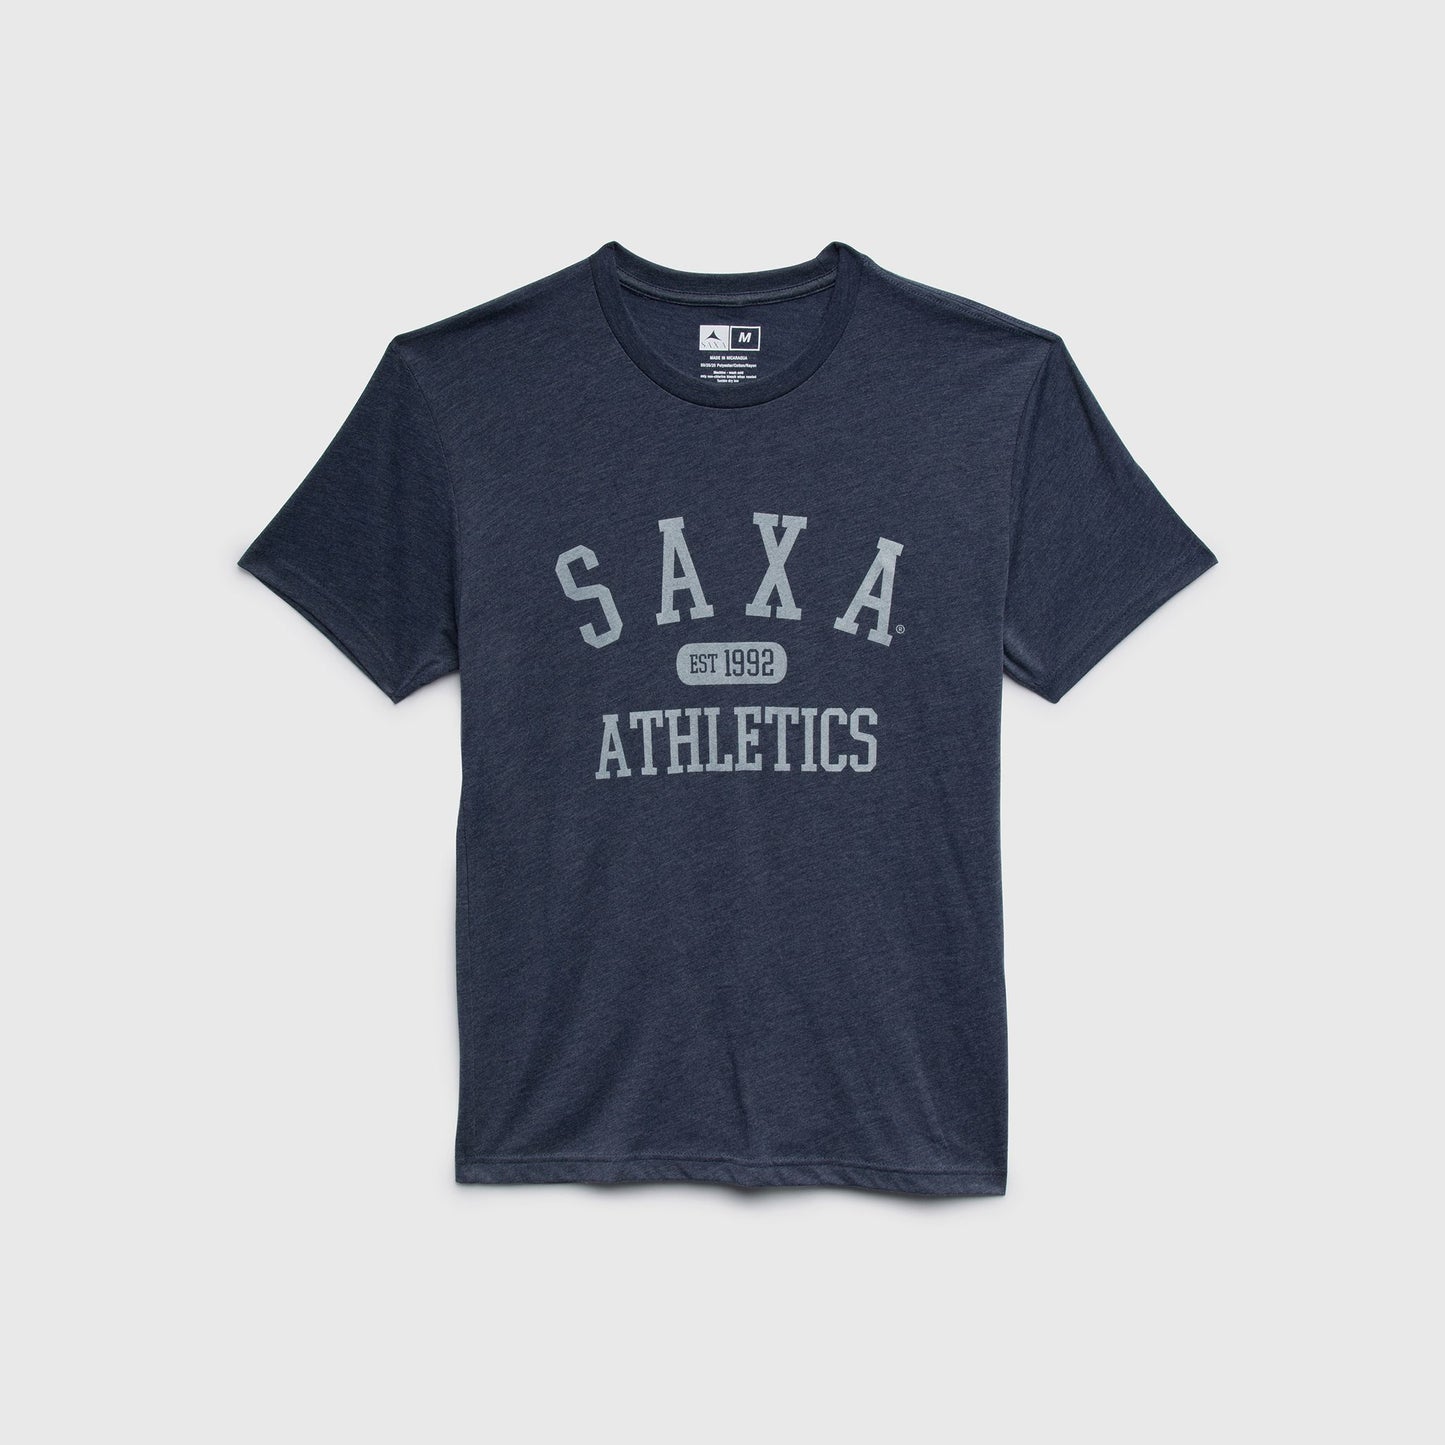 SAXA Athletics T-shirt